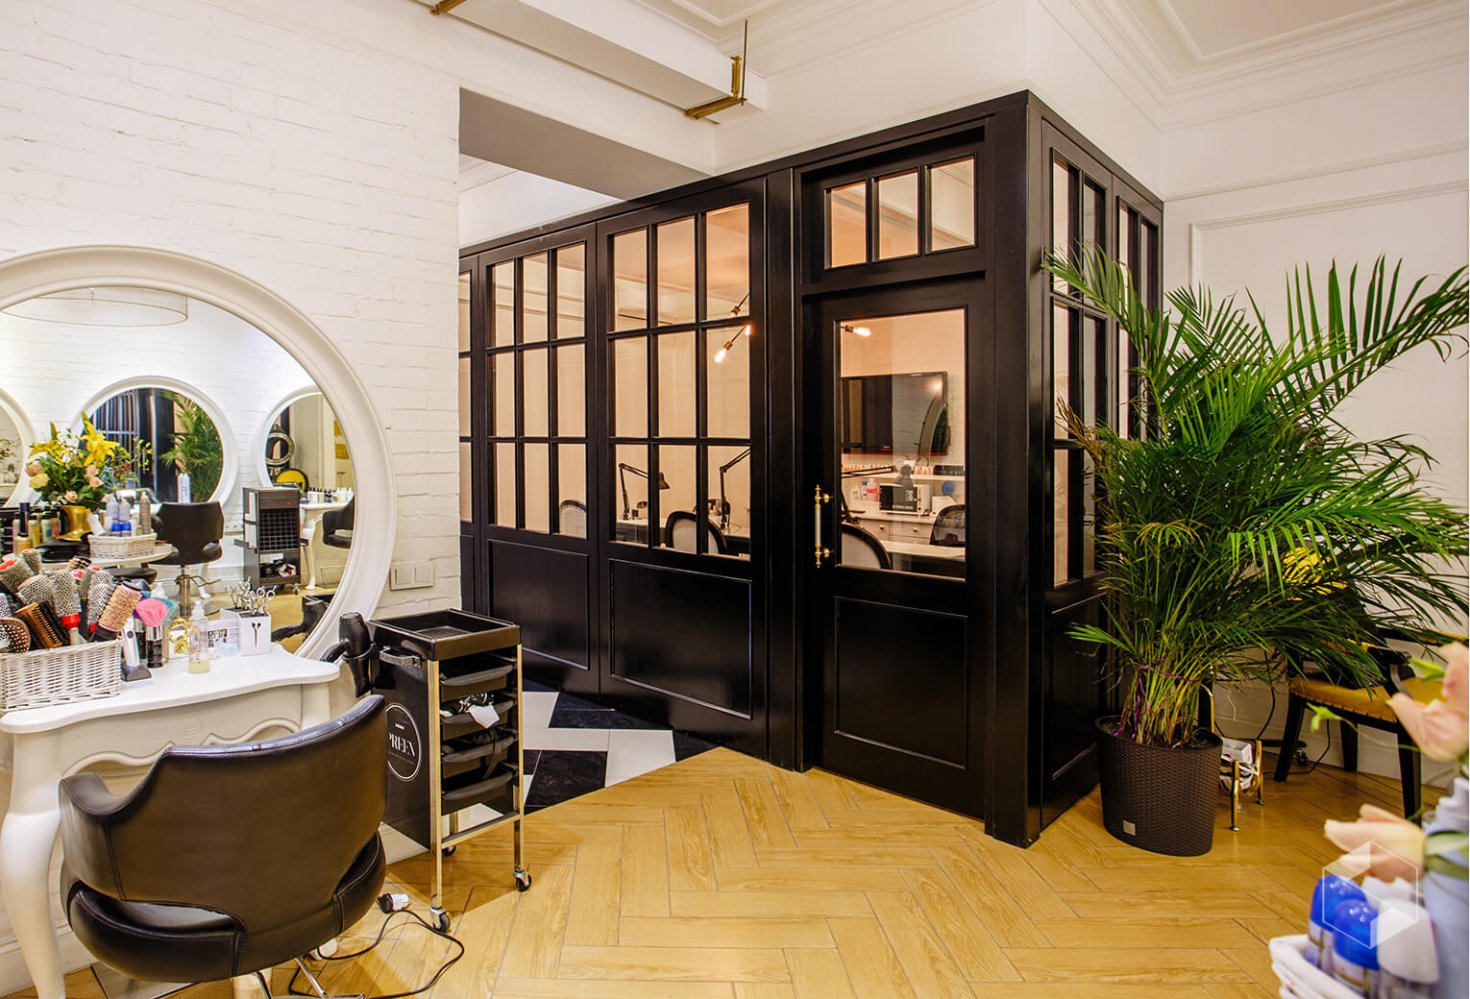 Preen beauty studio